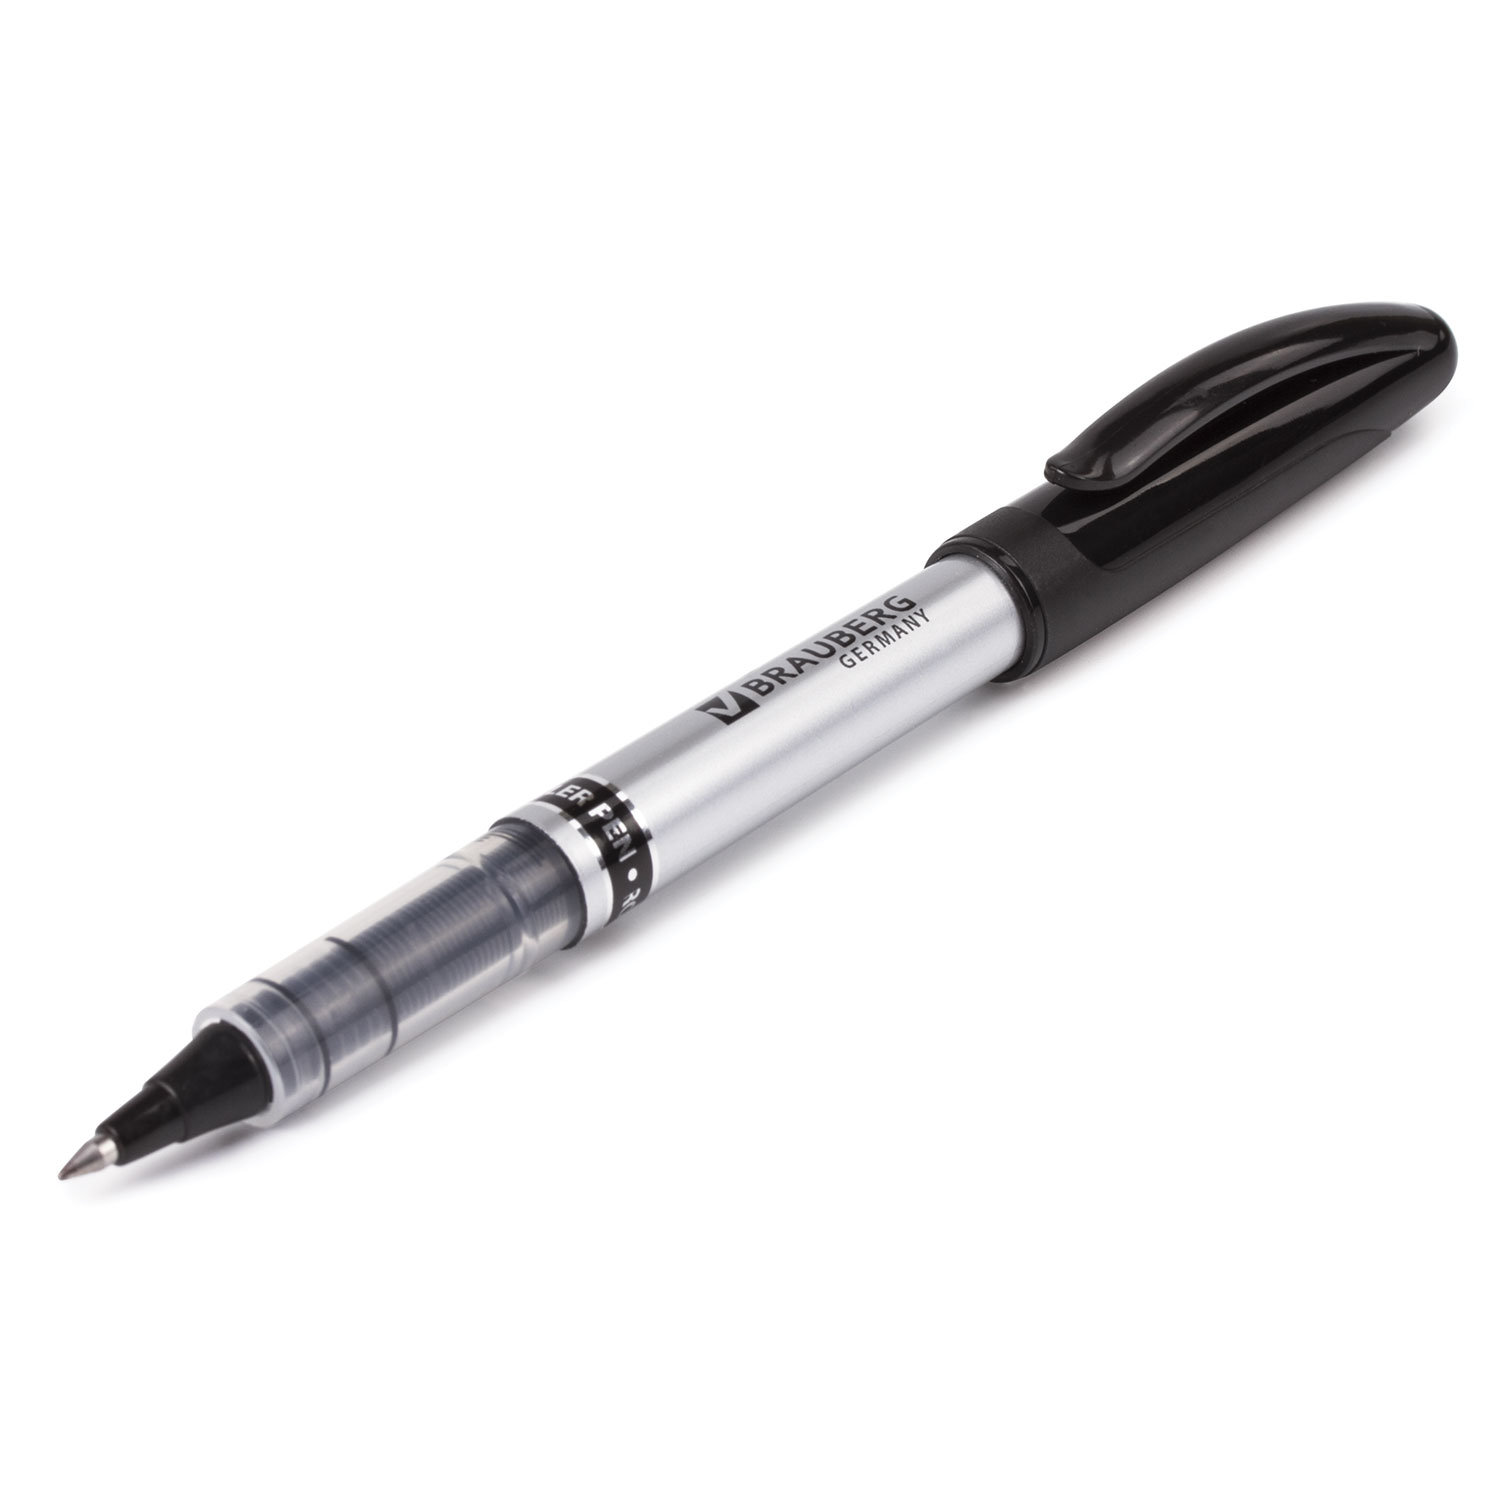 Письма 0 5 мм. Черная ручка BRAUBERG. BRAUBERG 0.5 мм Roller Pen rp102. Ручка синяя BRAUBERG артикул141632. Ручка-роллер BRAUBERG/ЕК 0,5-0,7мм.